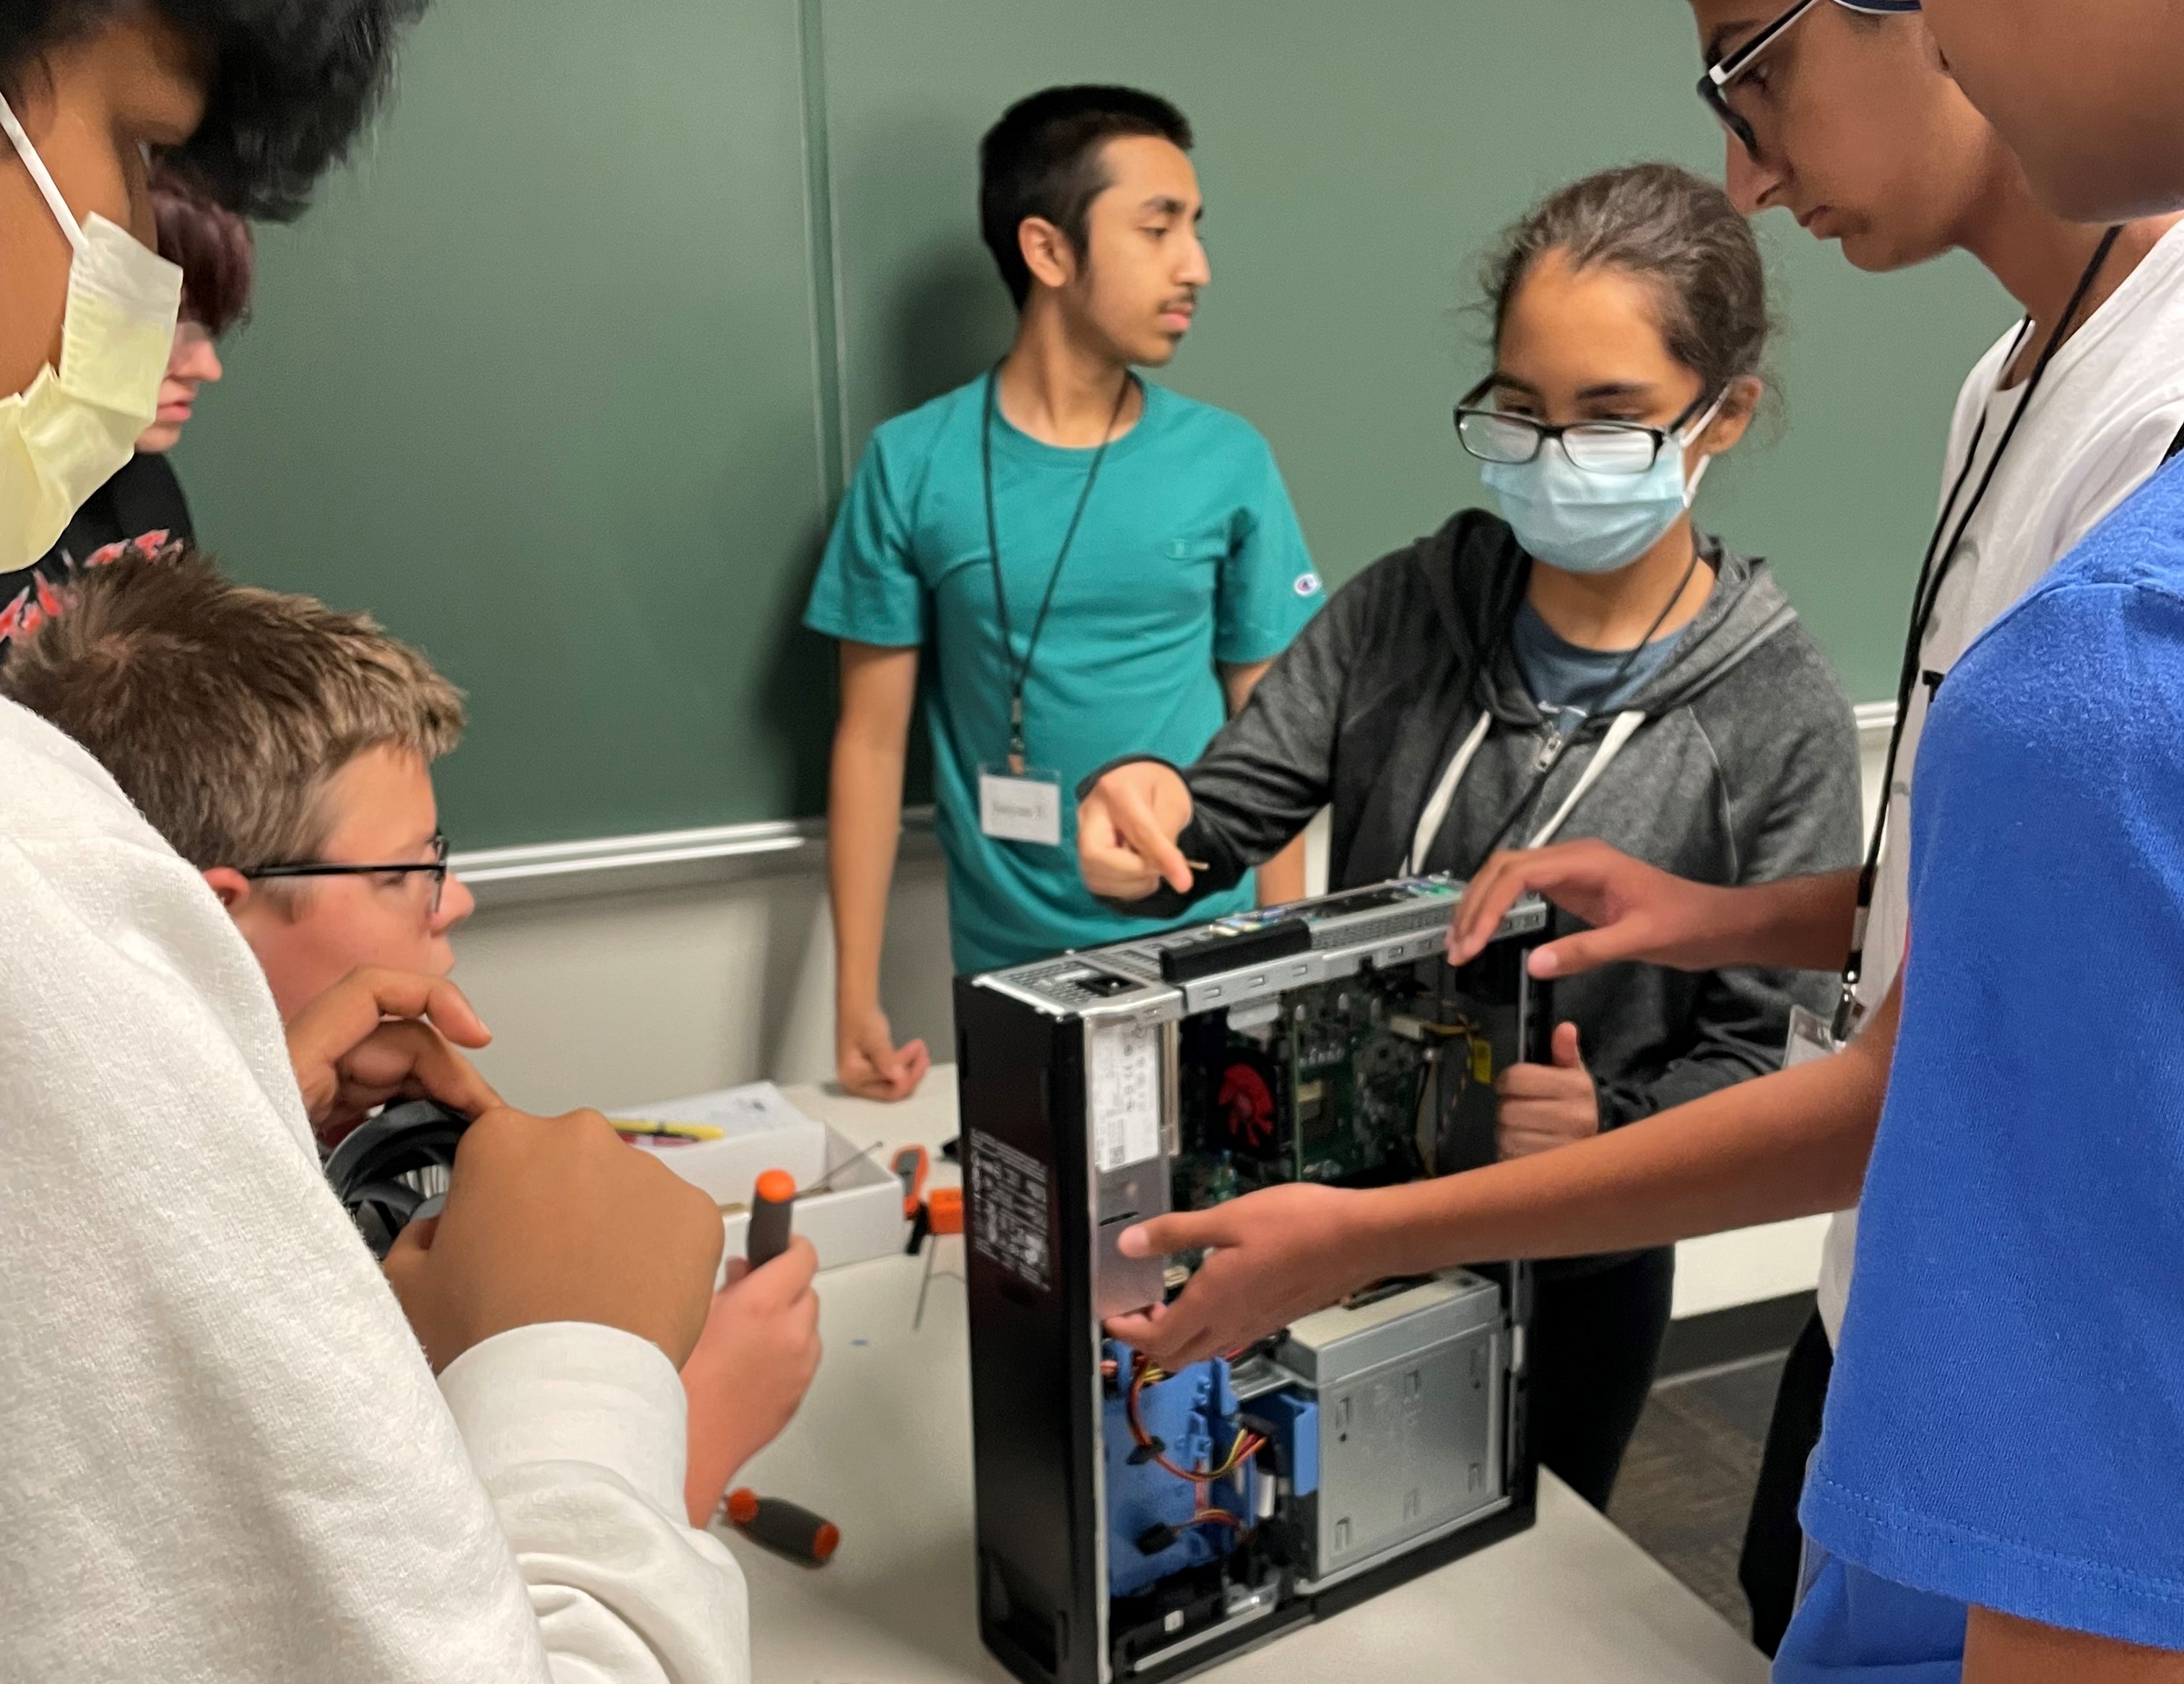 Students examine computer hardware.